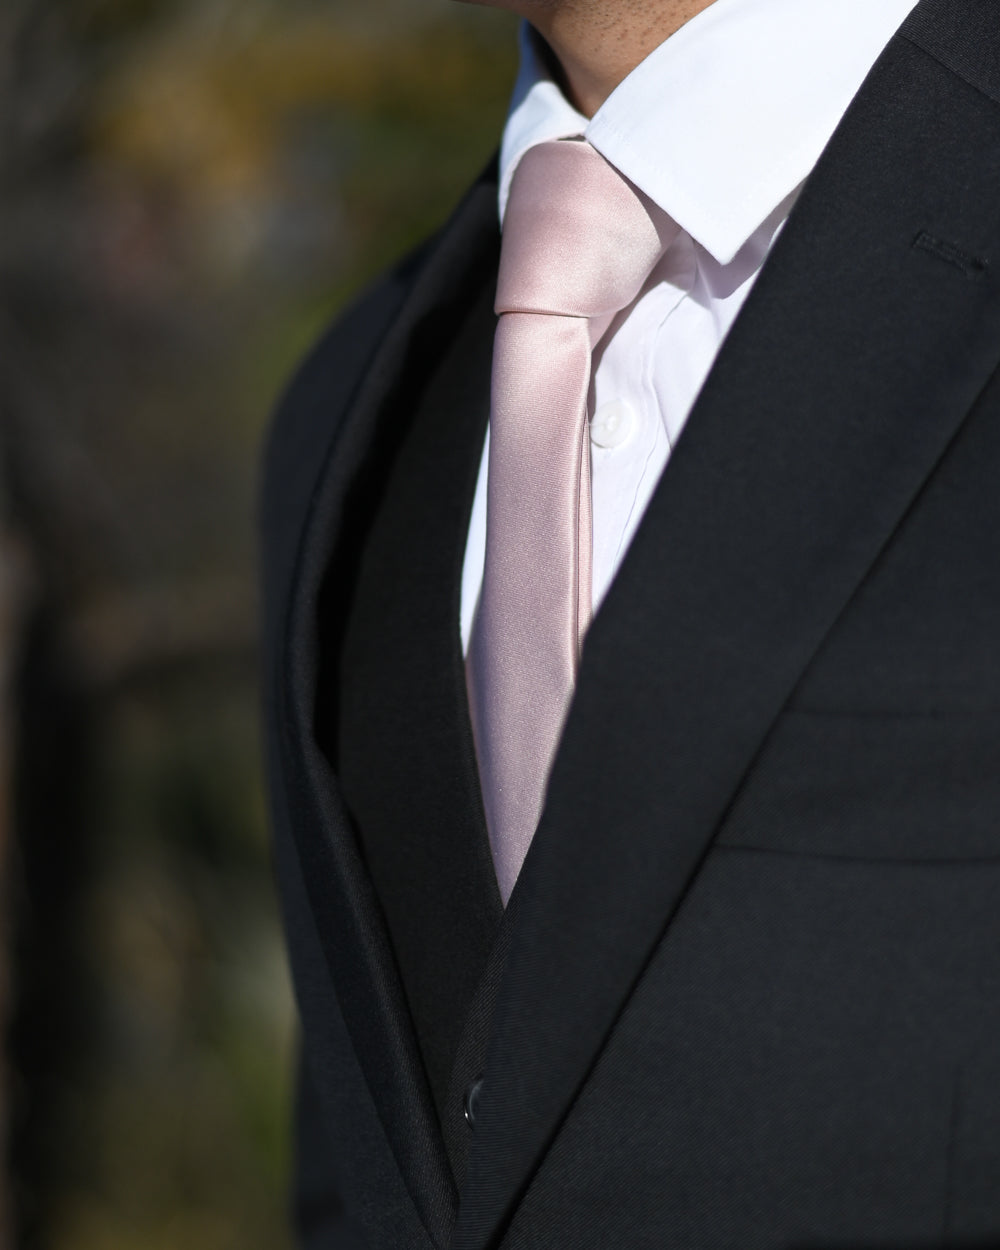 Pale pink silk-look tie worn with a black three-piece suit